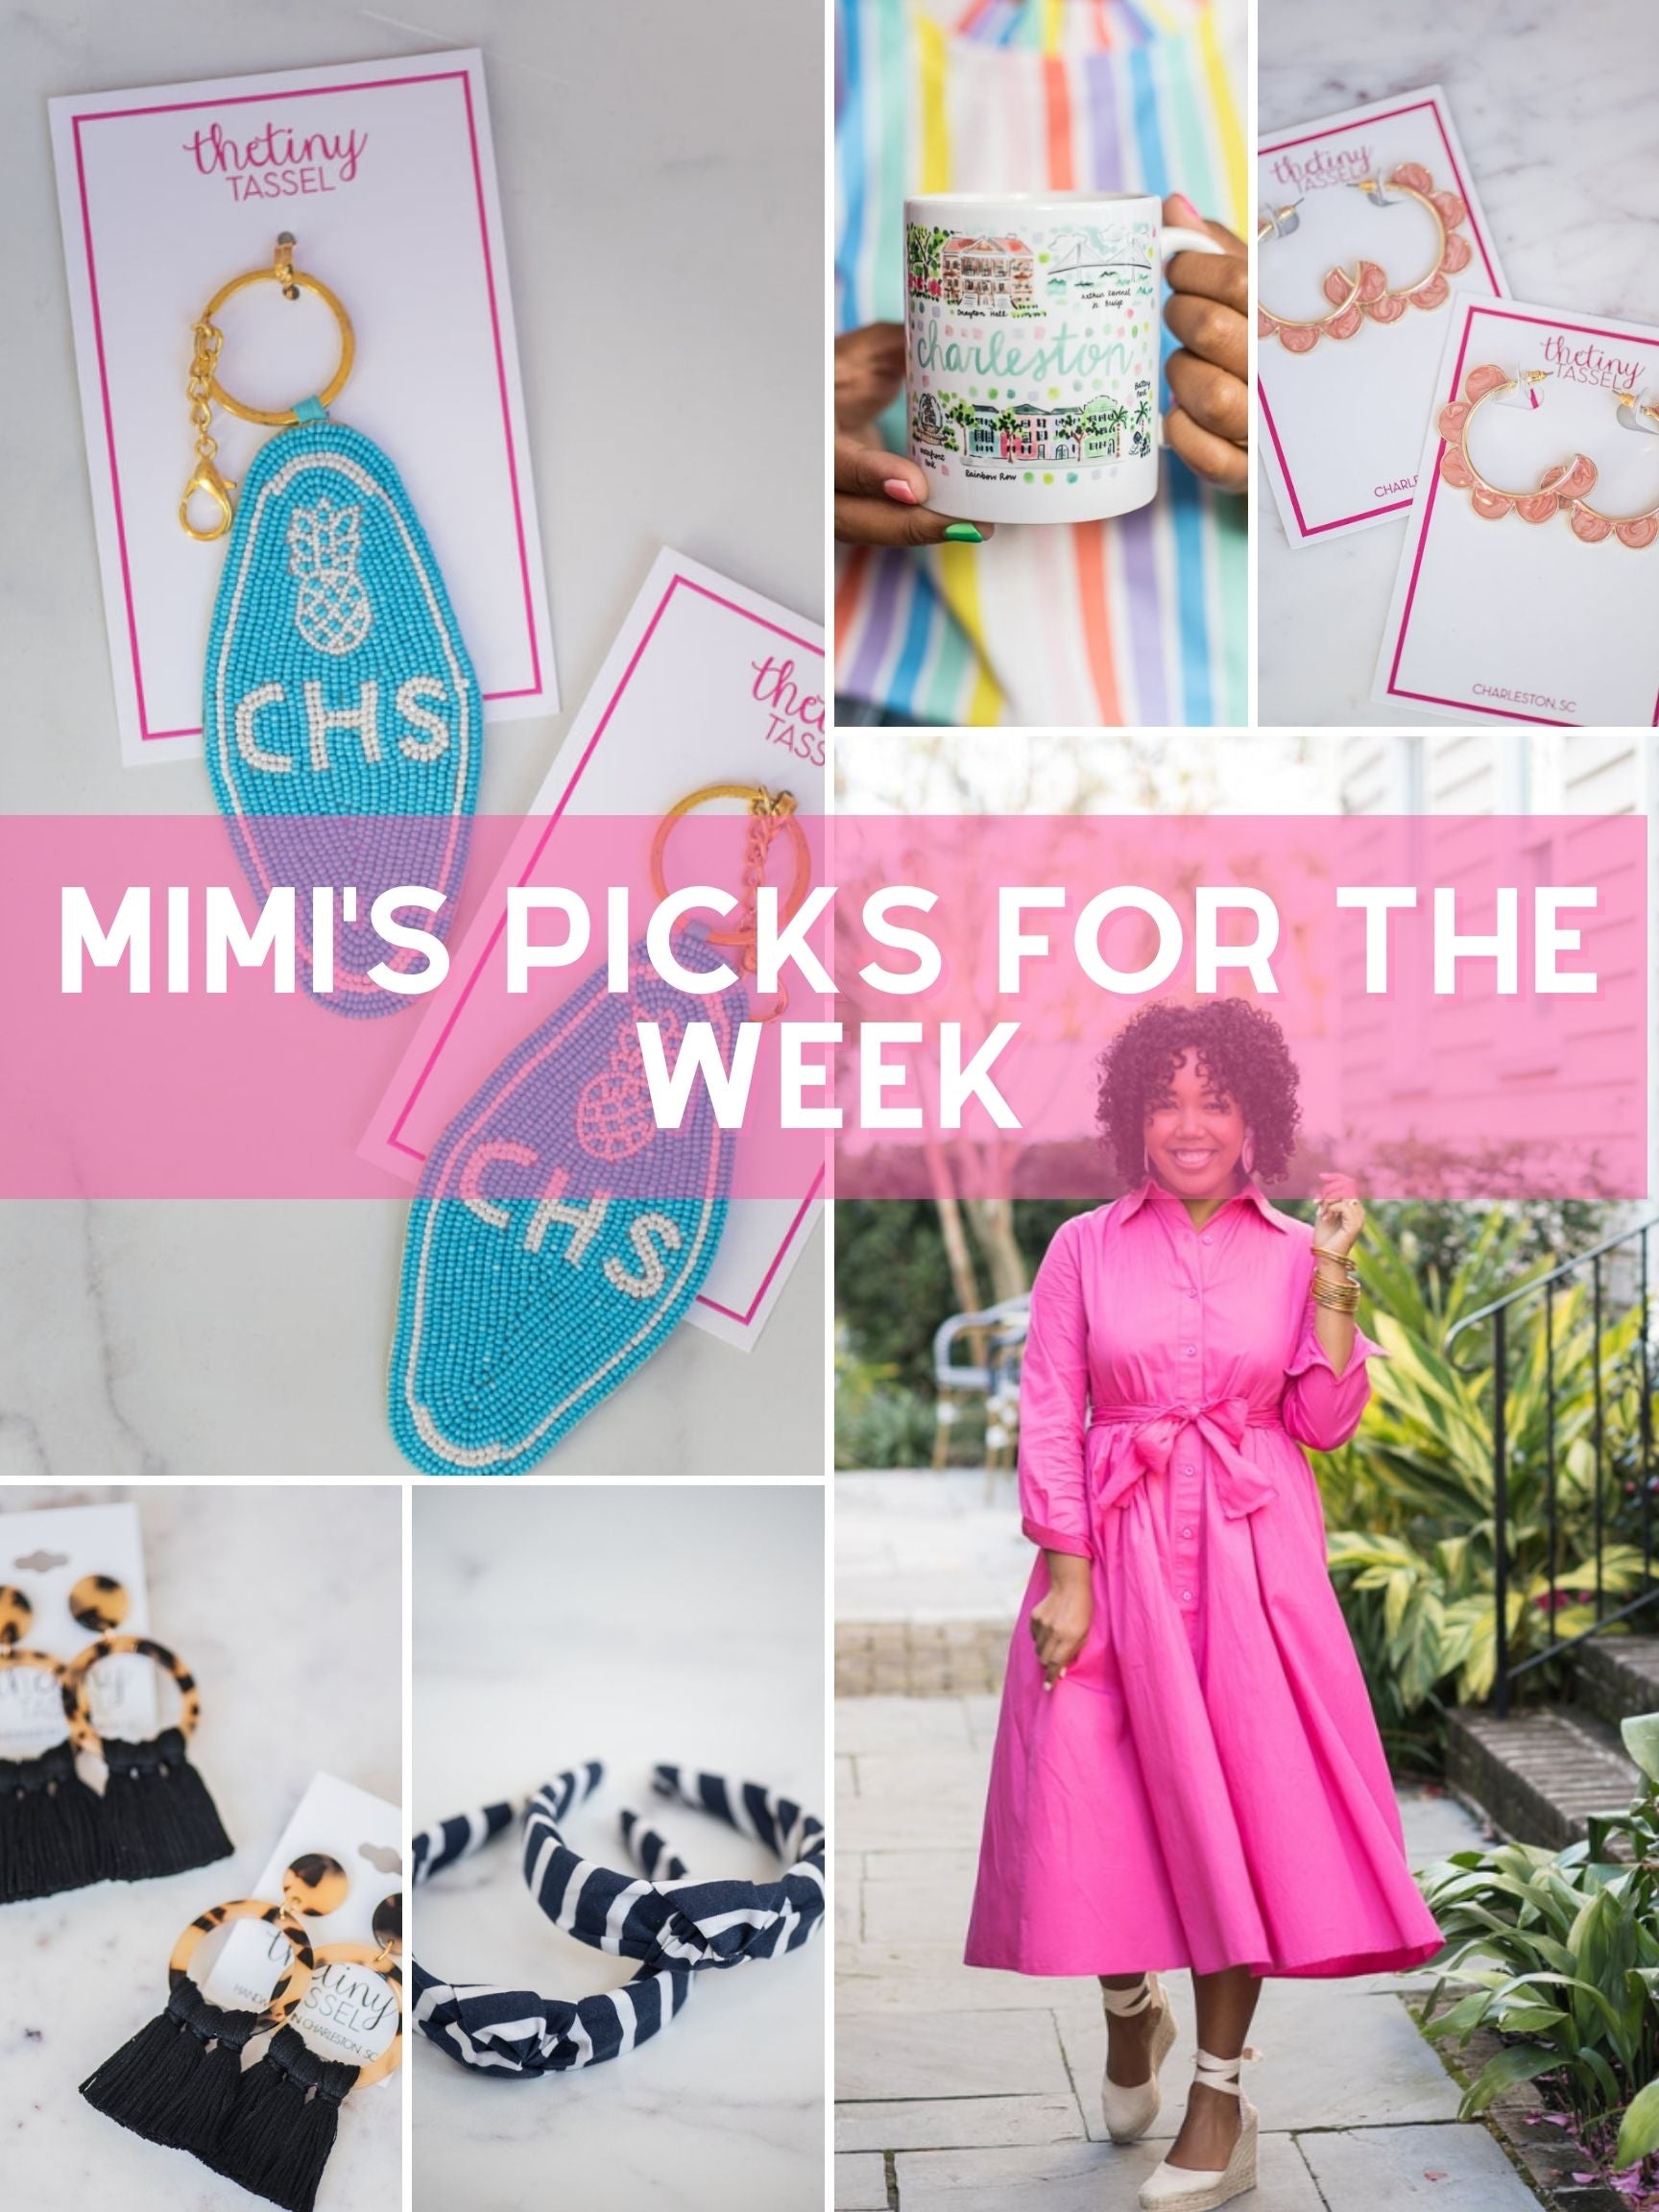 alt="mimi's picks for the week"